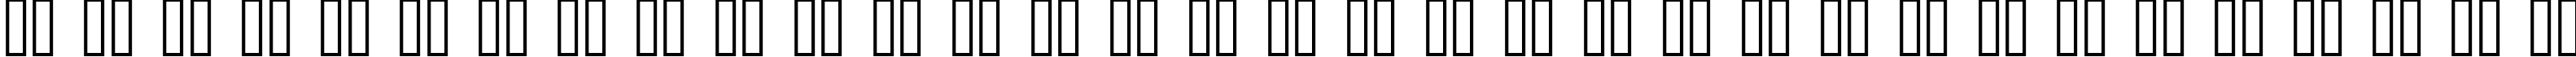 Пример написания русского алфавита шрифтом RivenShield  Italic